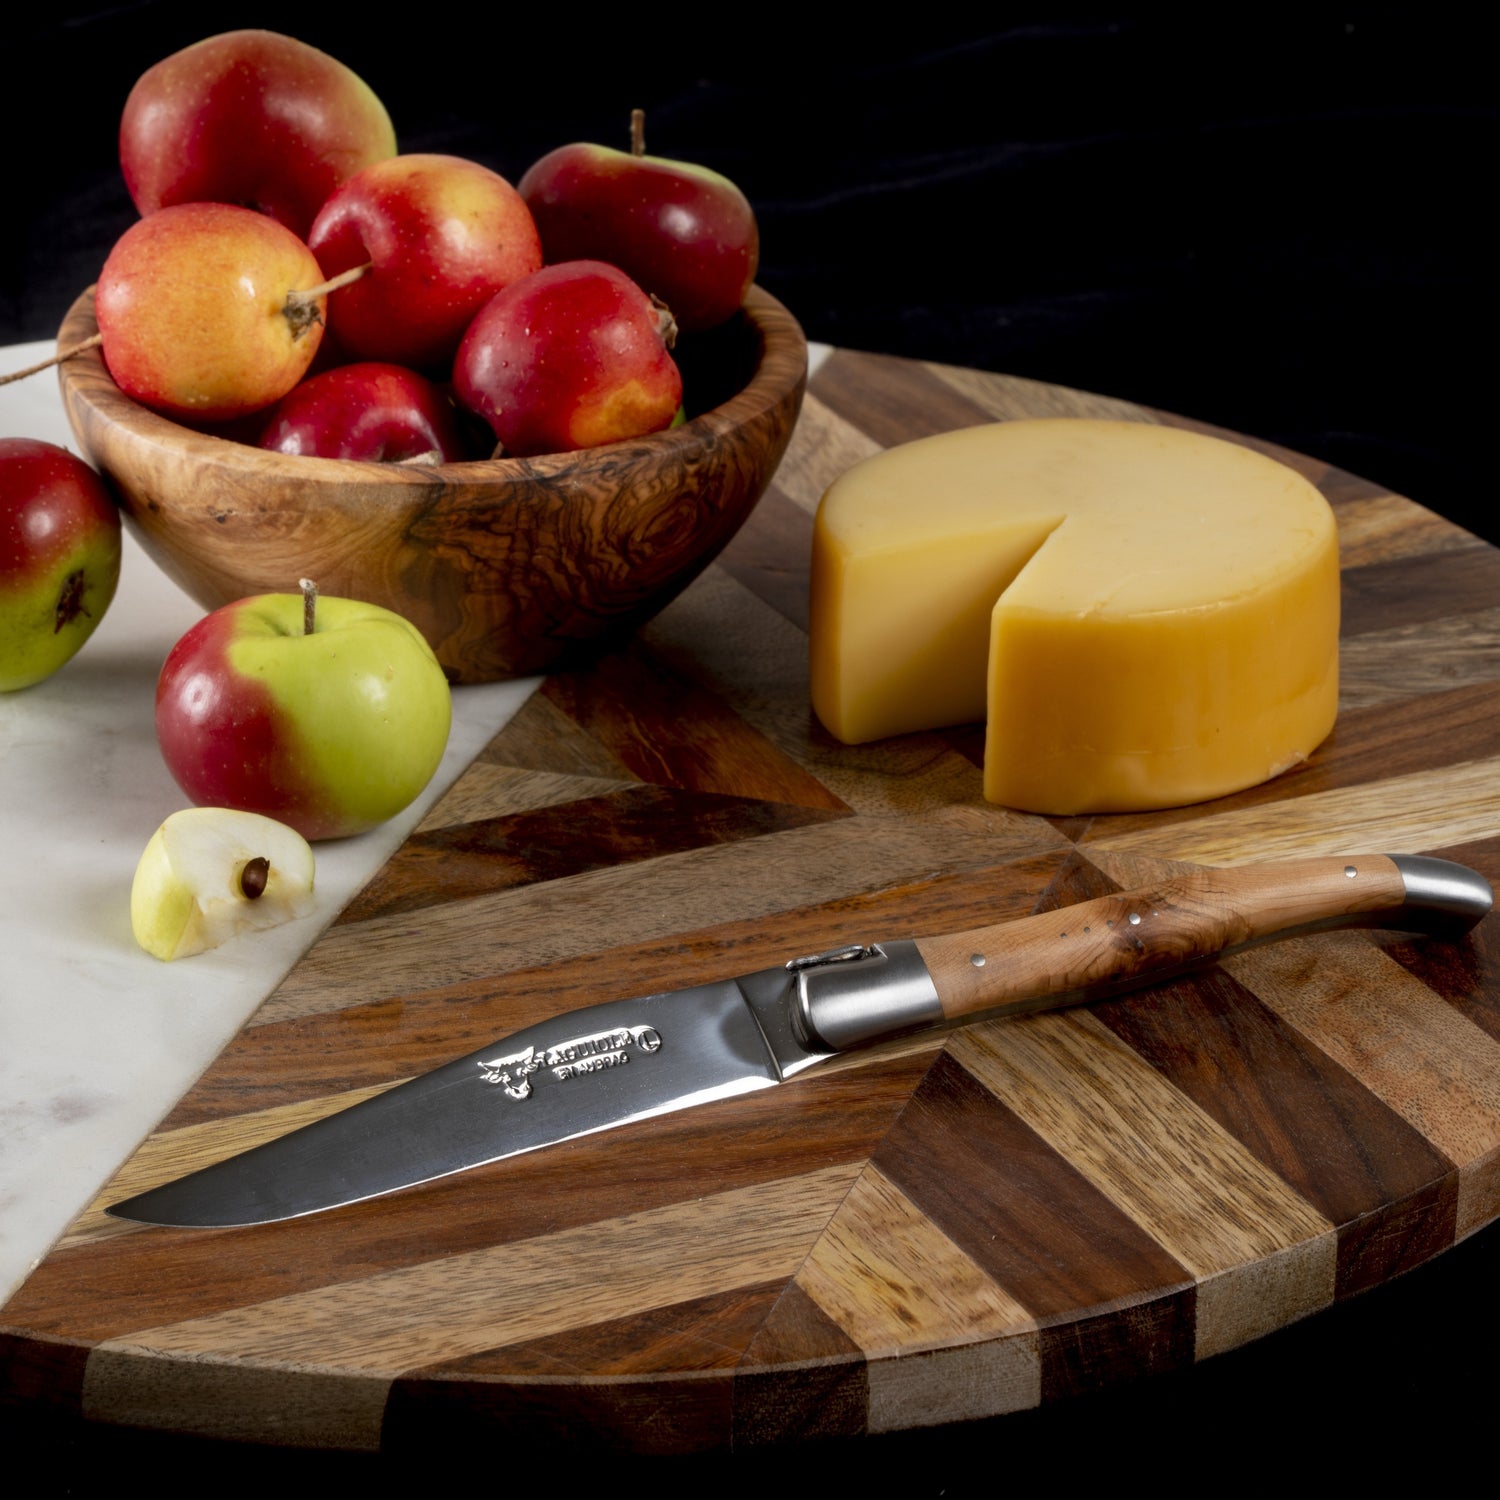 Set of 6 Laguiole en Aubrac Steak Knives Juniper wood handle